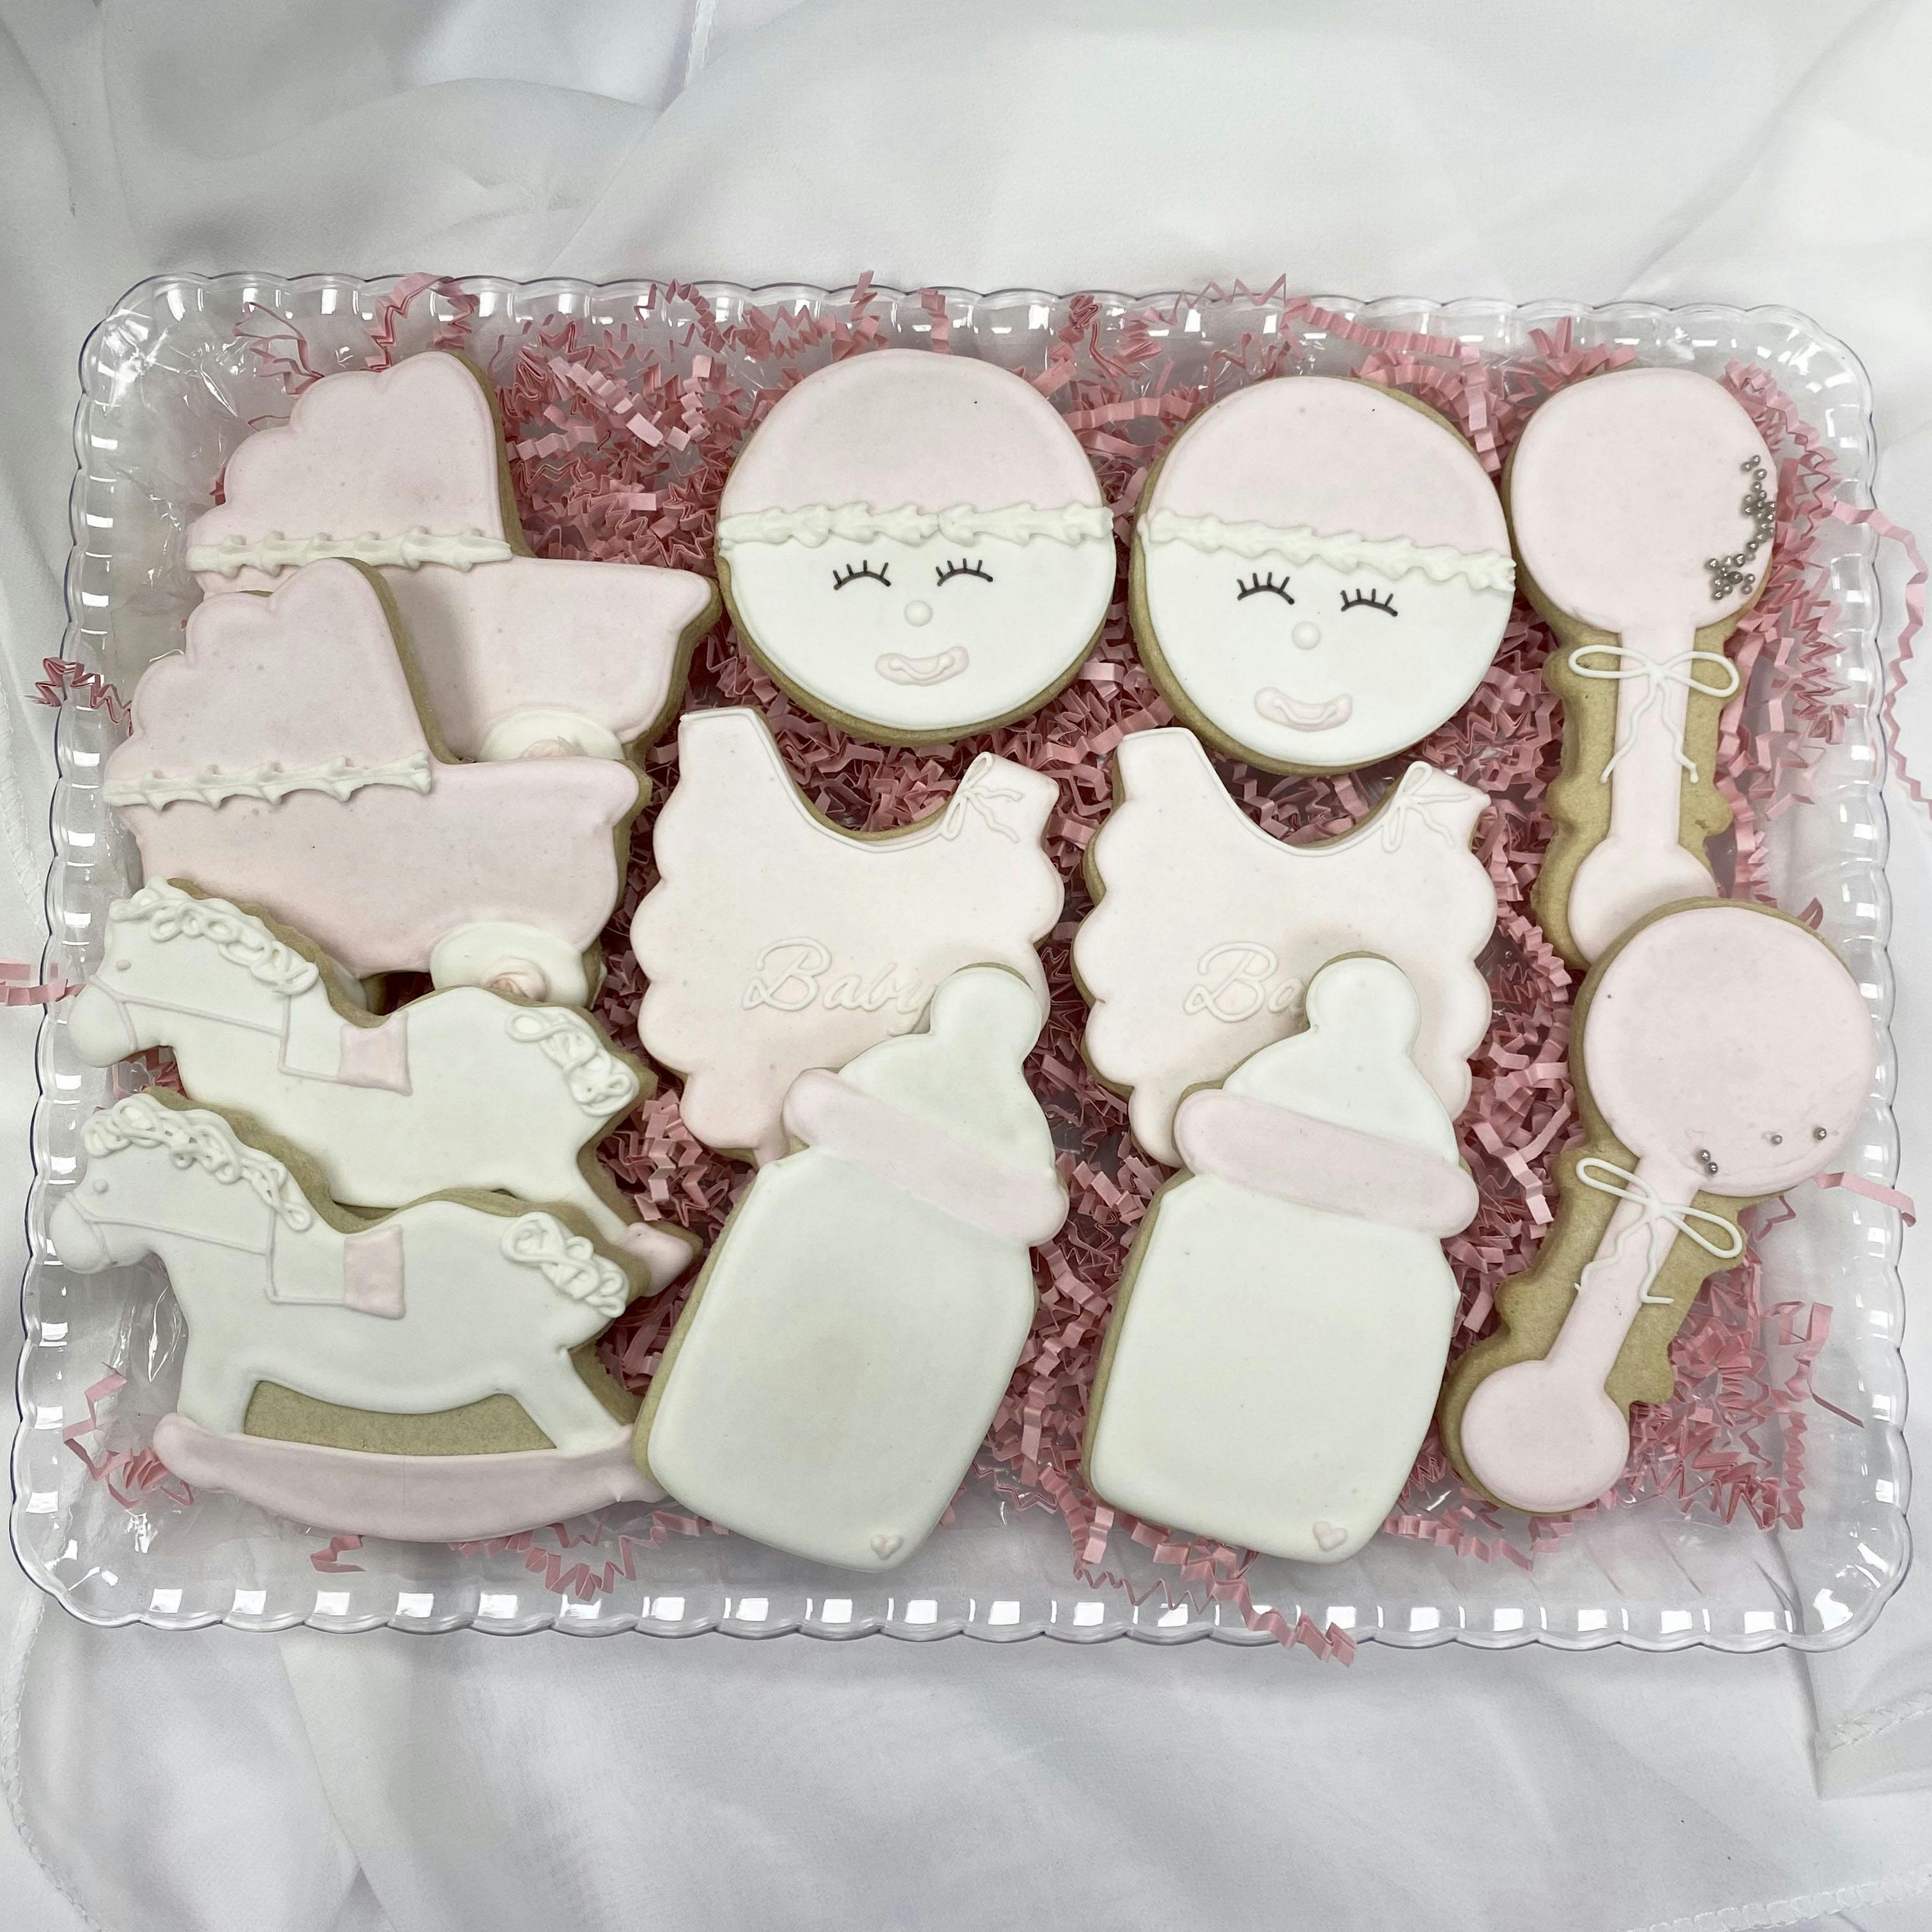 Iced Sugar Cookie Christmas Gift Set - 12 Pack Elegant Desserts